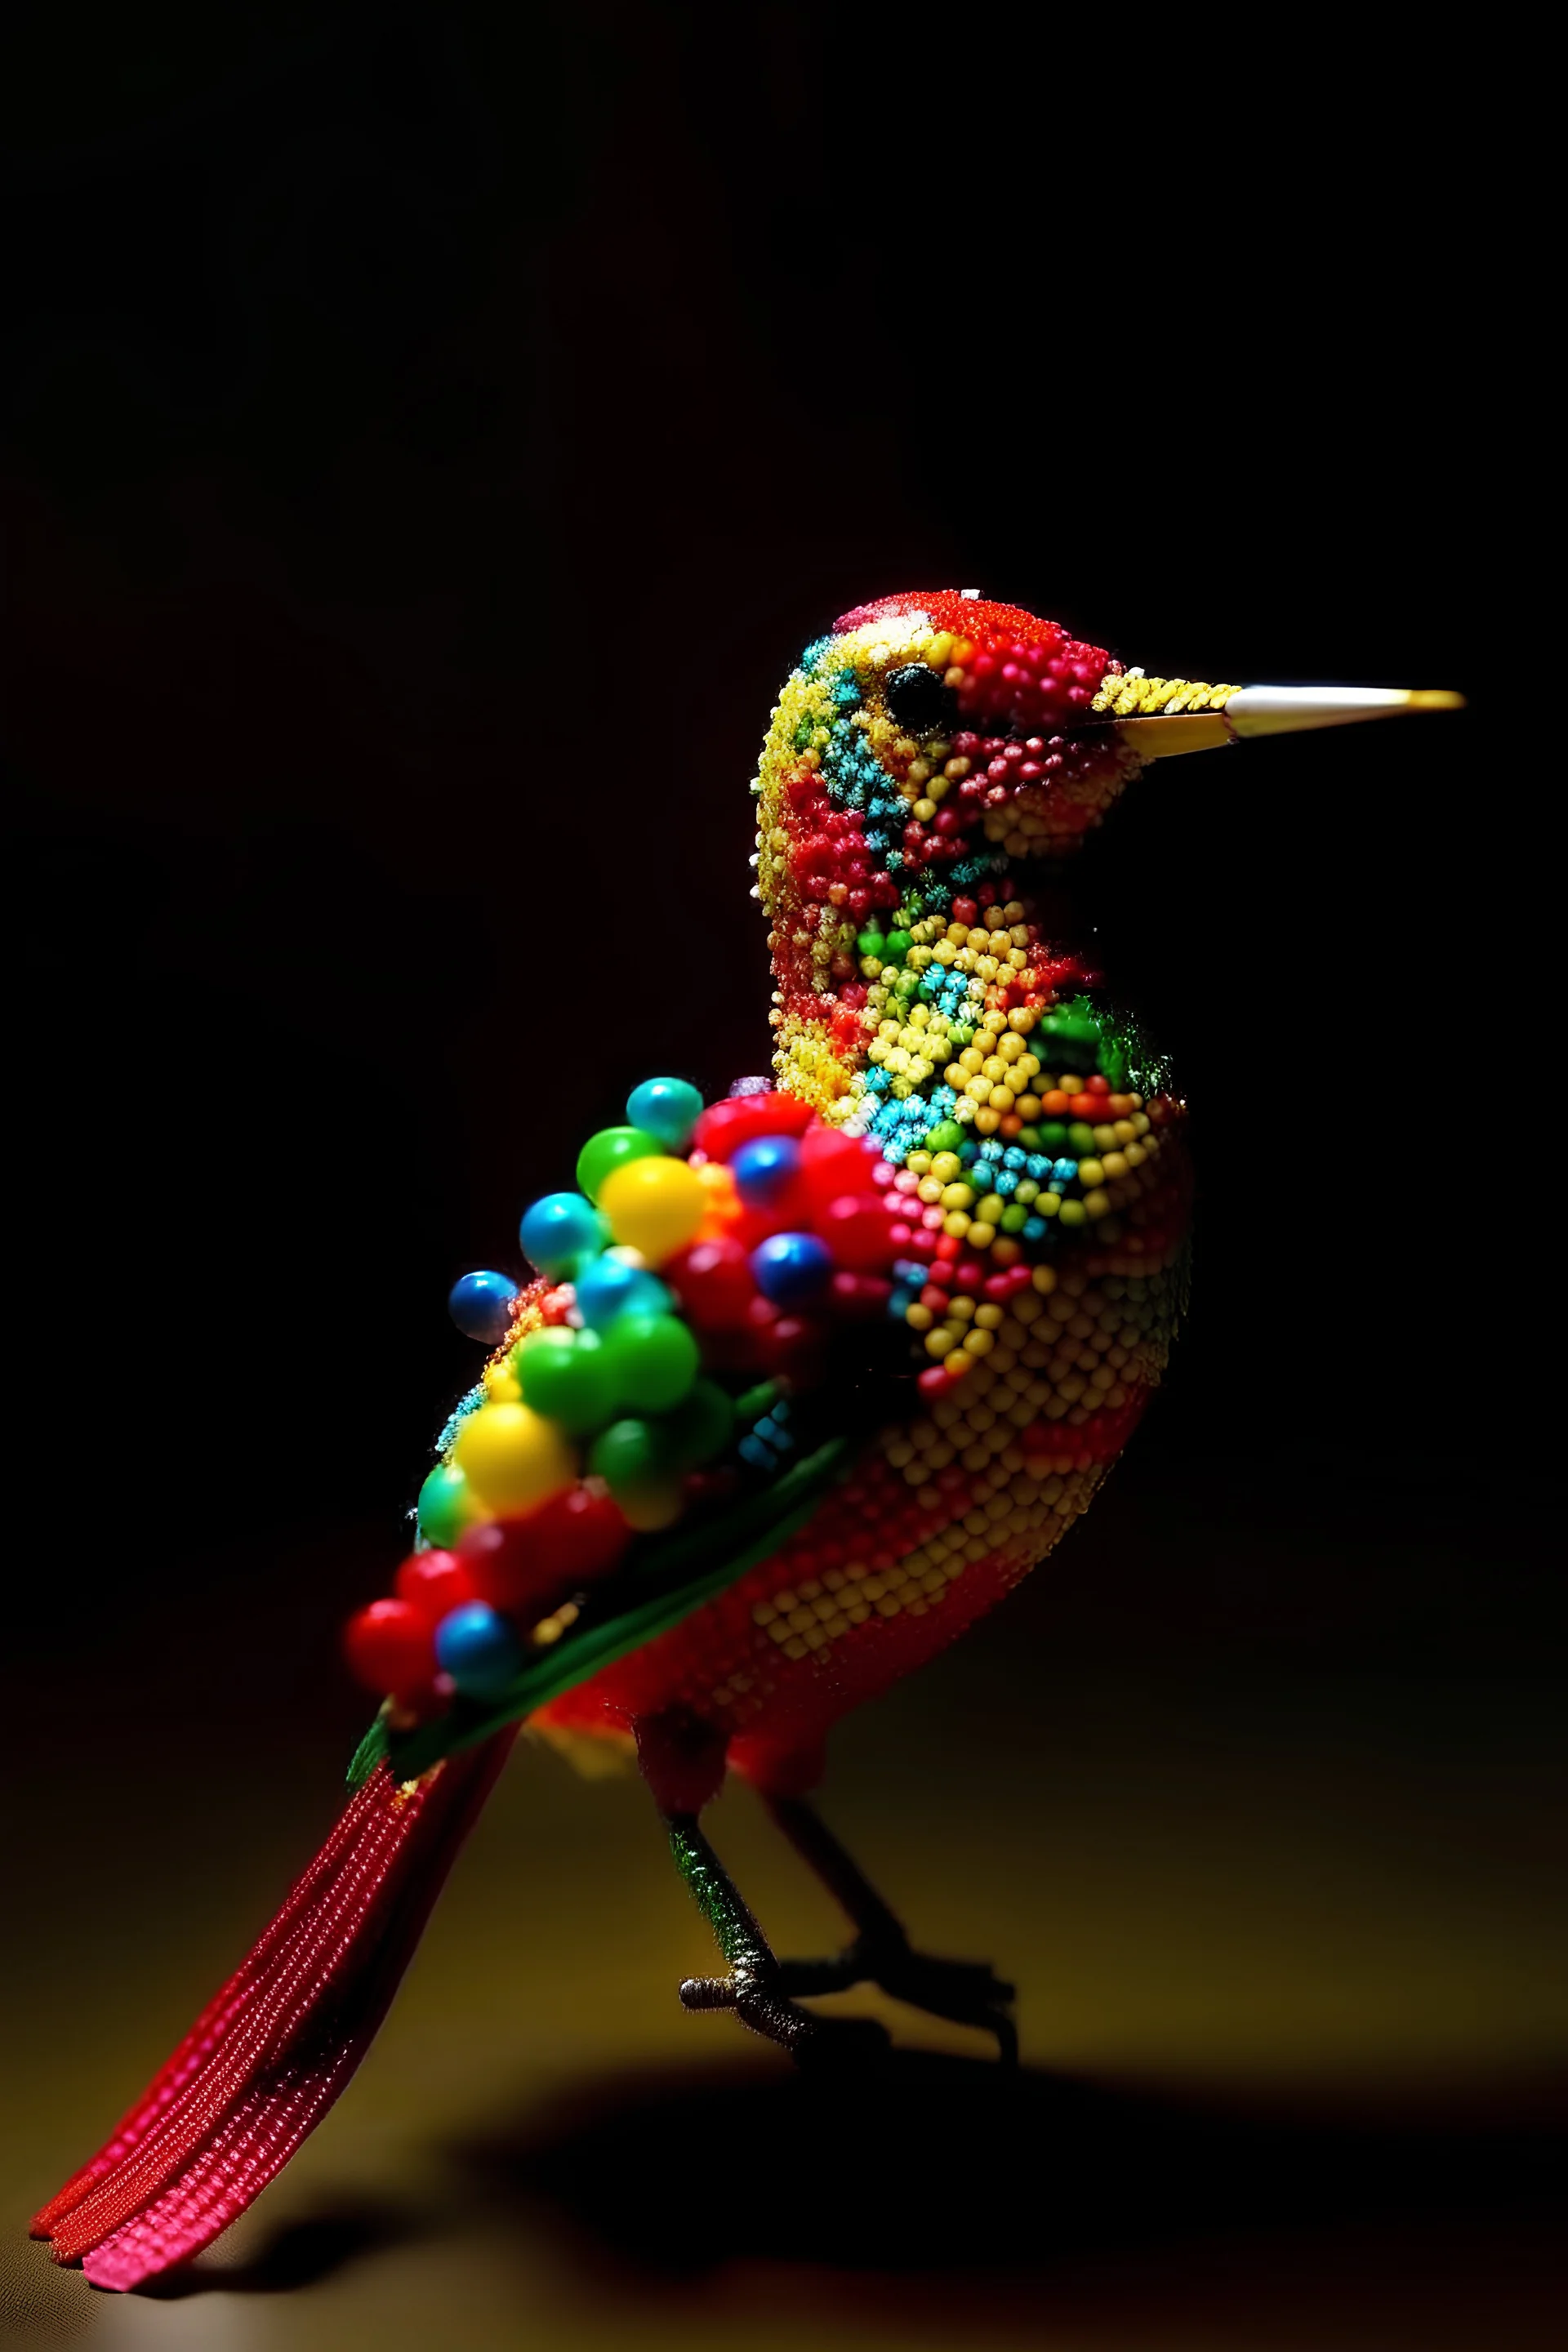 a hummingbird made up of candy